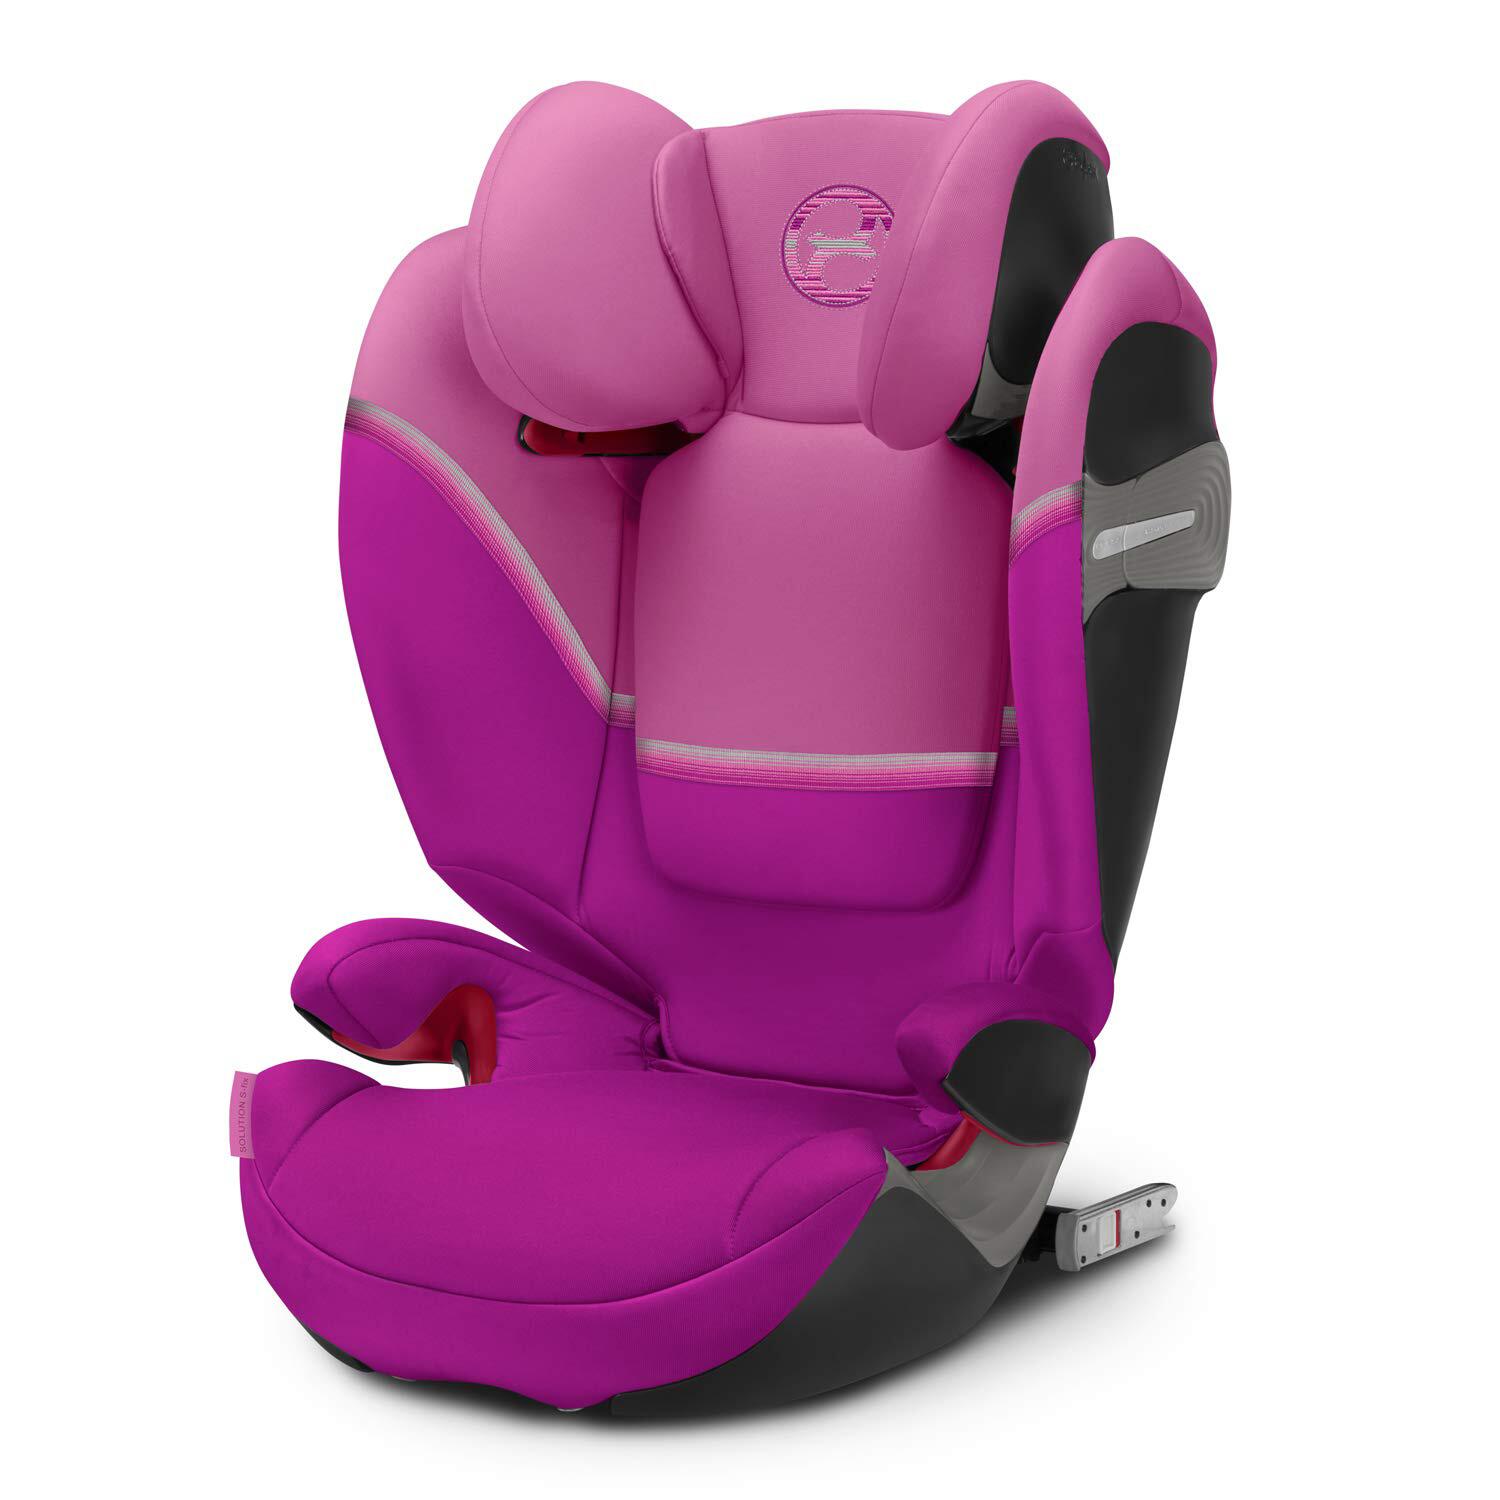 Kindersitz Ab 18 Kg Mit Isofix Test Kindersitz Test 2021